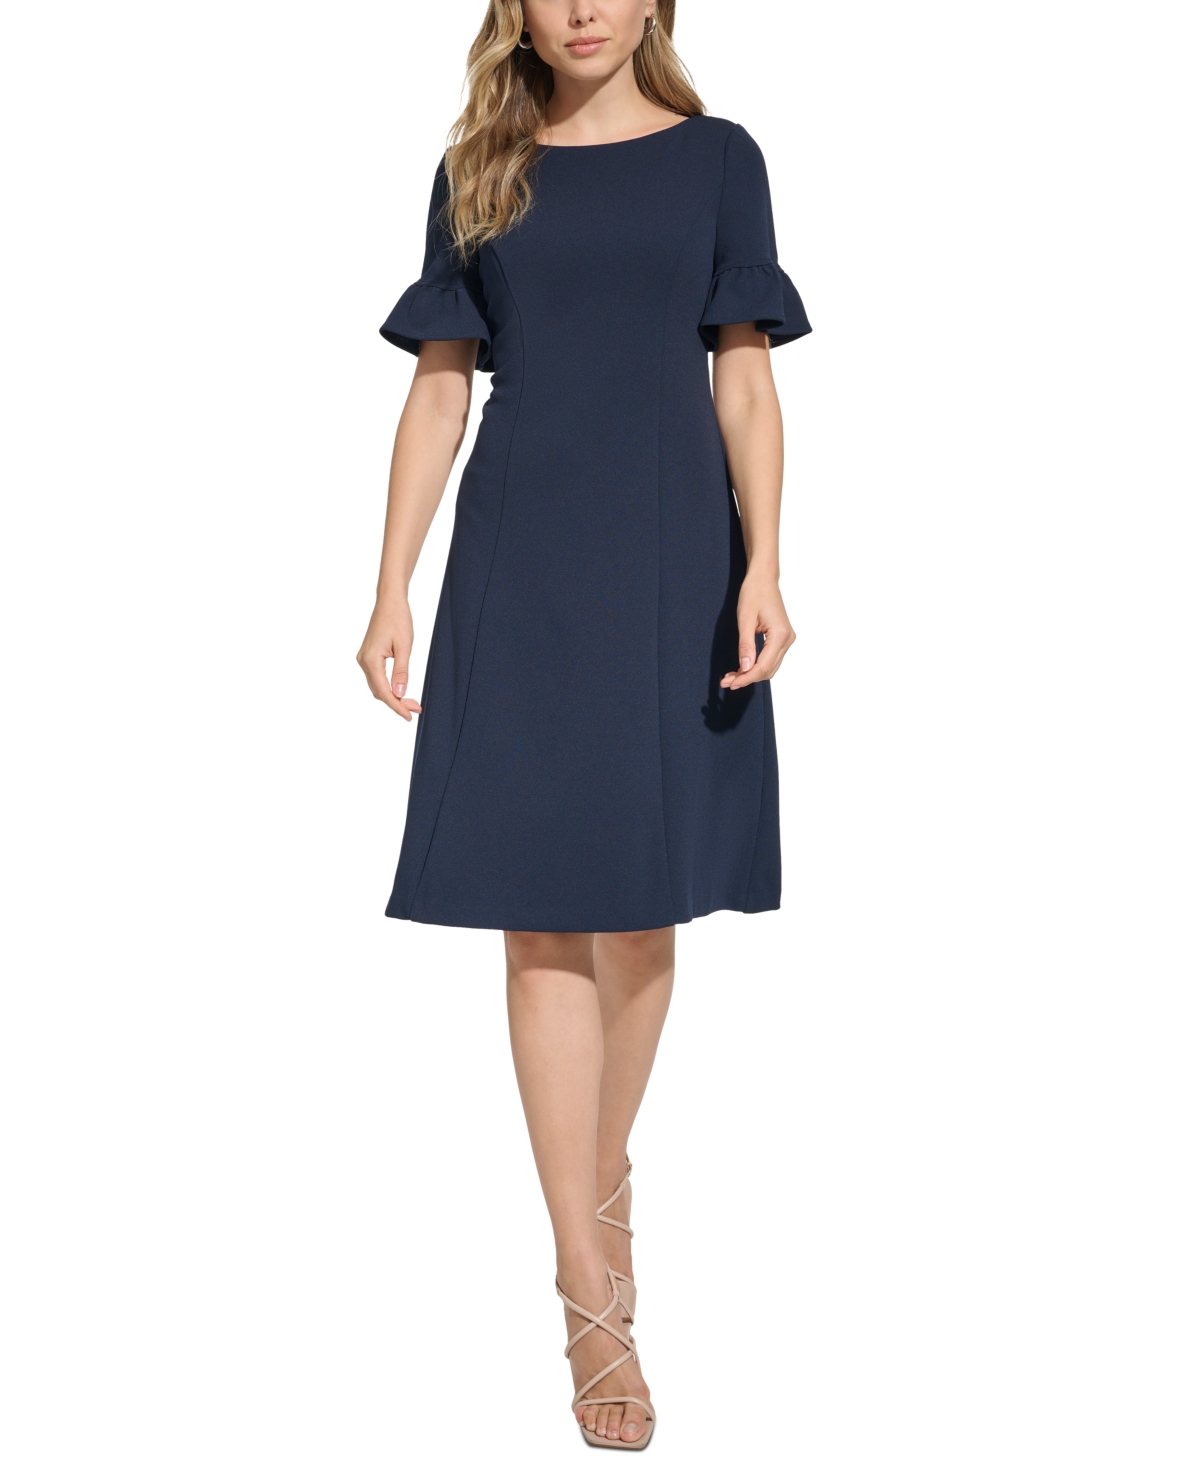 Women's Solid Flutter-Sleeve Fit & Flare Dress - Navy